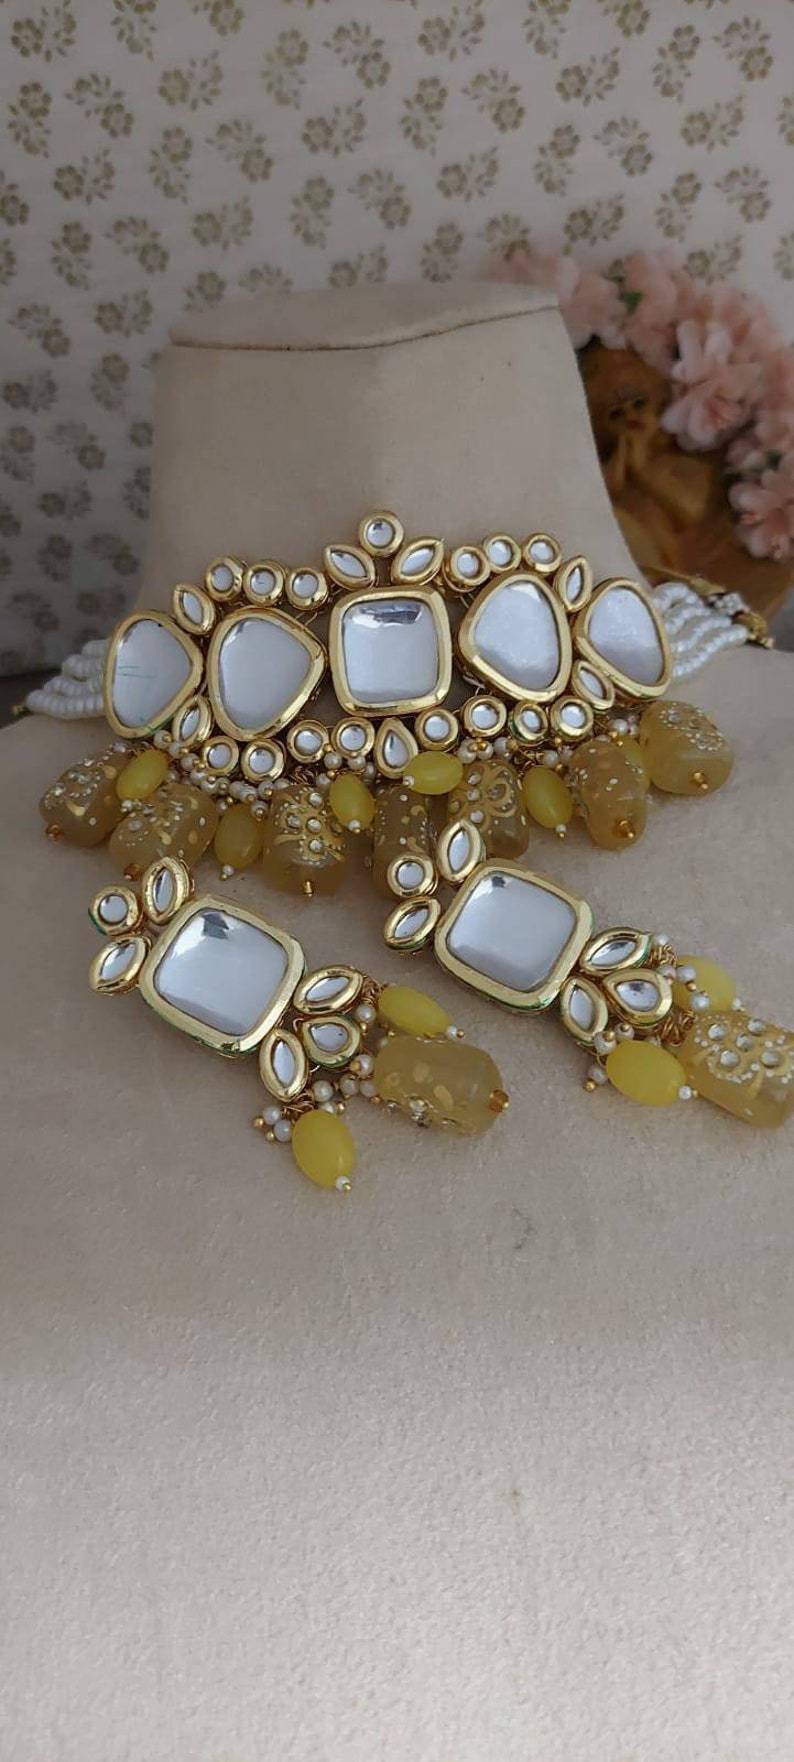 Kundan Necklace, Indian Jewelry, Indian Wedding Jewelry, Ethnic Jewelry Design, Kundan Jewelry Set, Bridal Jewelry Set, Sabyasachi Necklace | Save 33% - Rajasthan Living 12